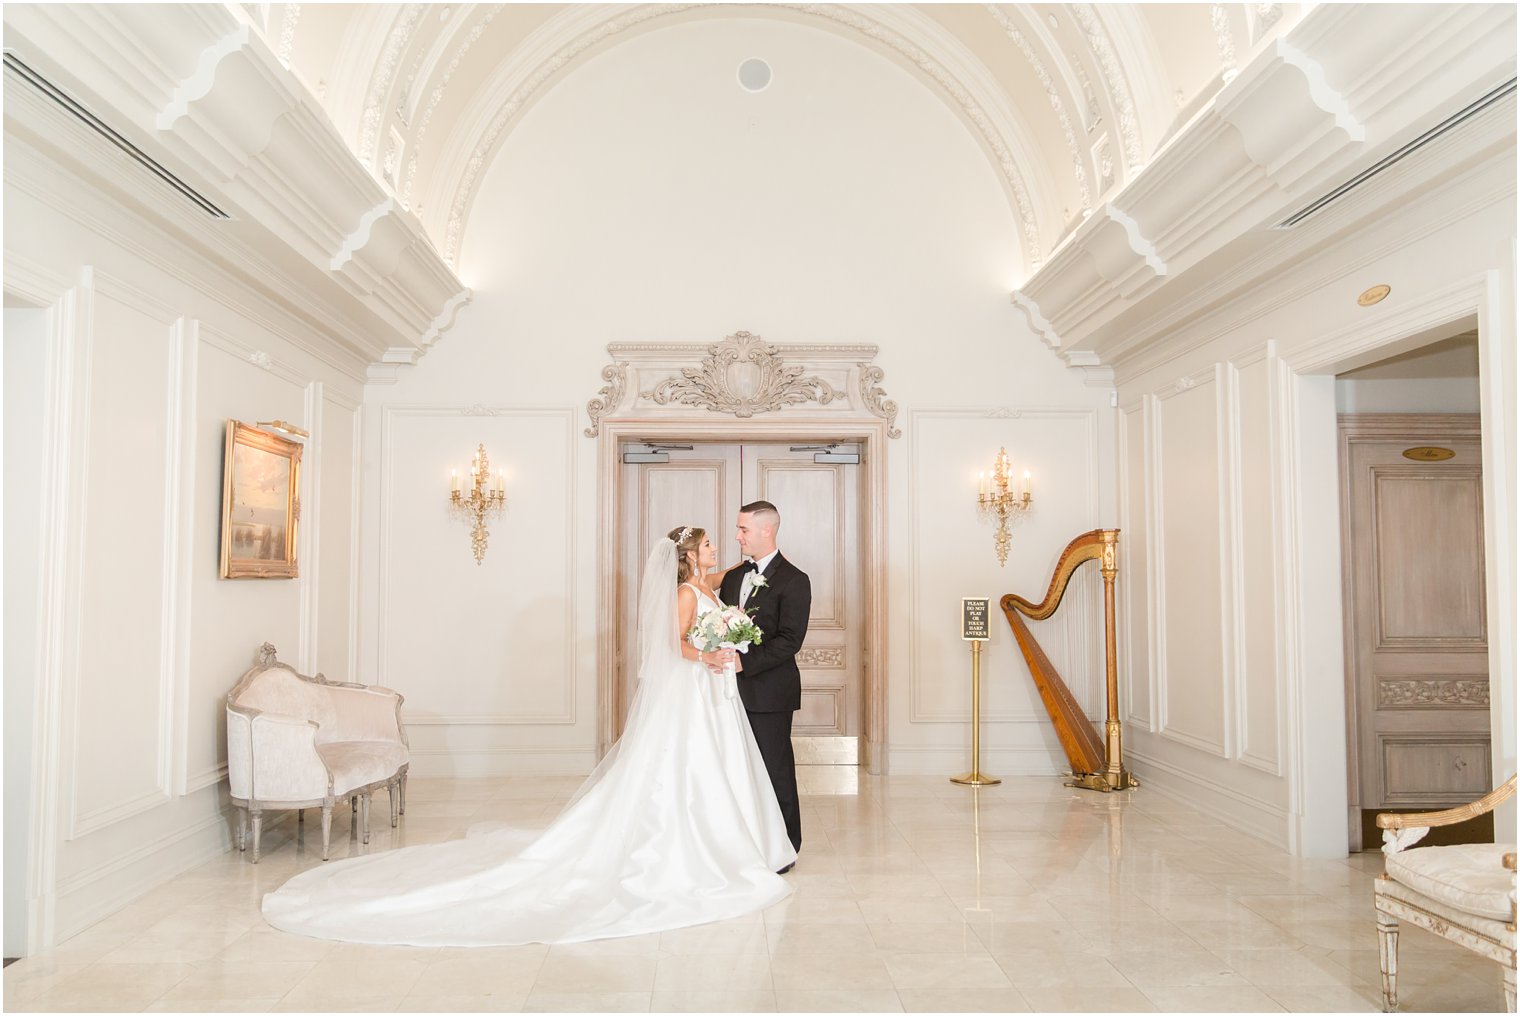 Elegant bride and groom photos during indoor wedding reception